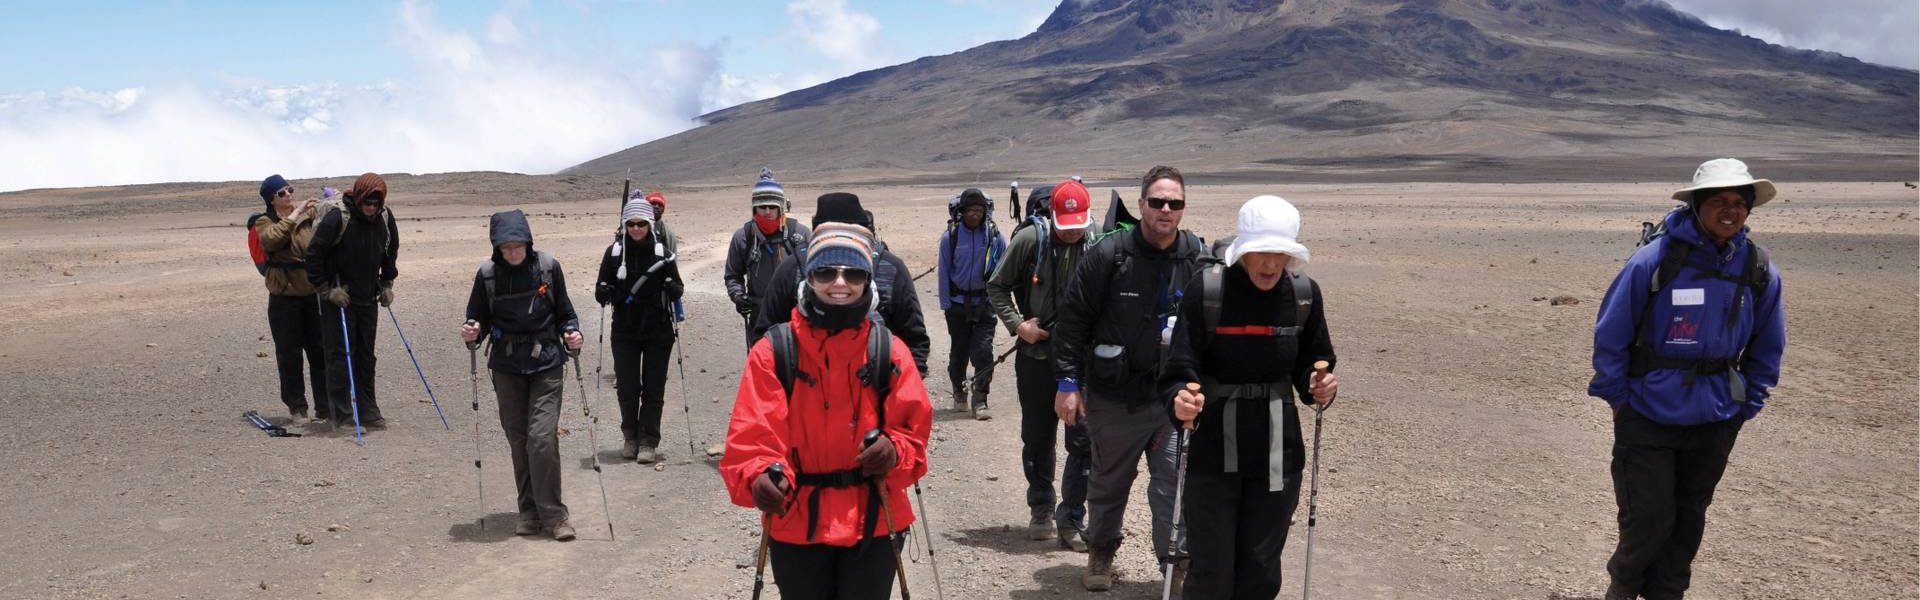 Altitude Sickness on Mount Kilimanjaro